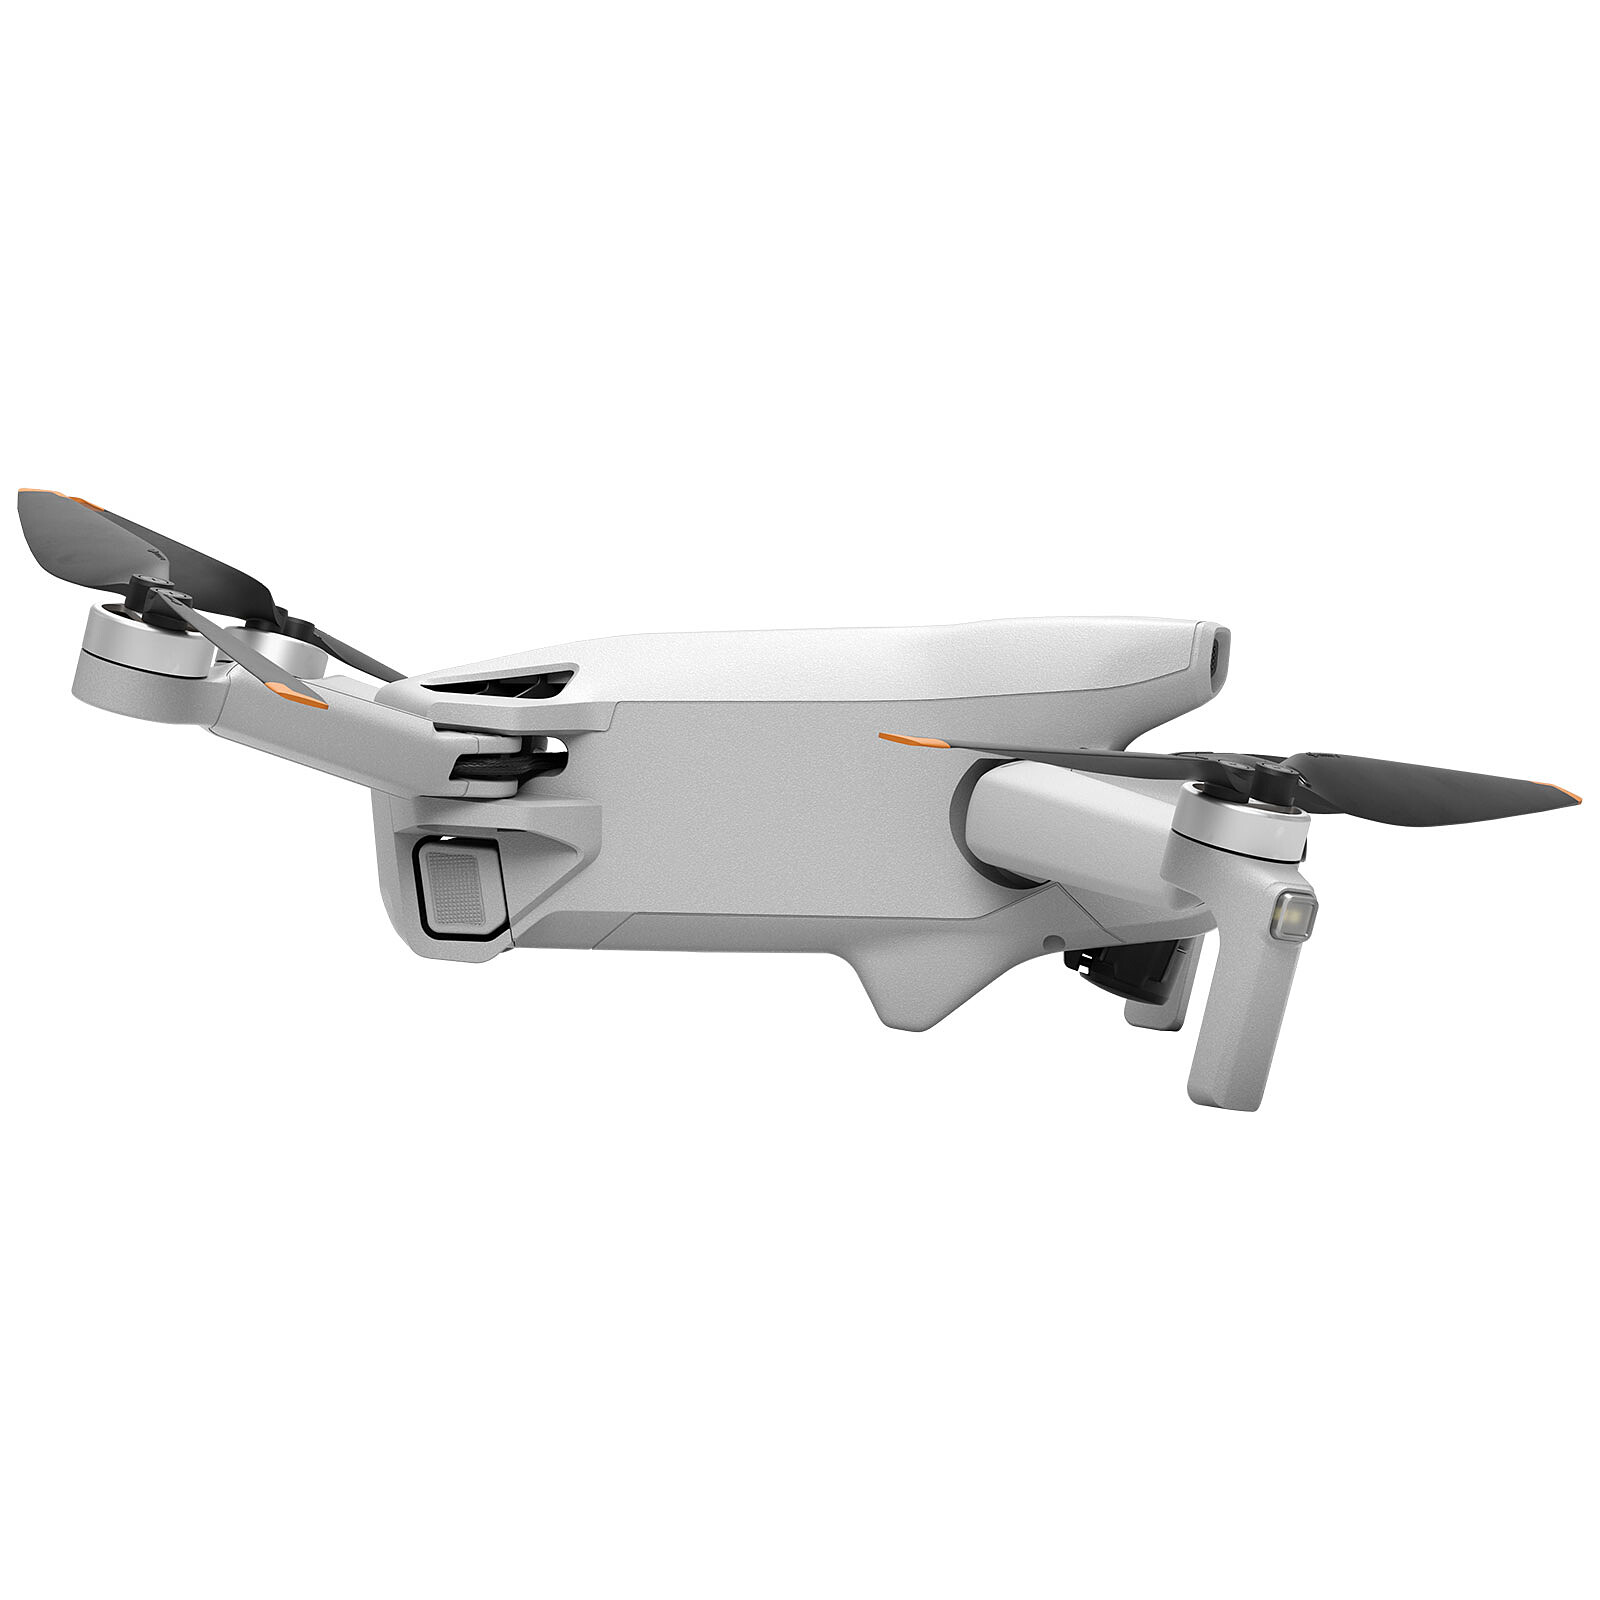 DJI Mini 3 Pro - Drone - LDLC